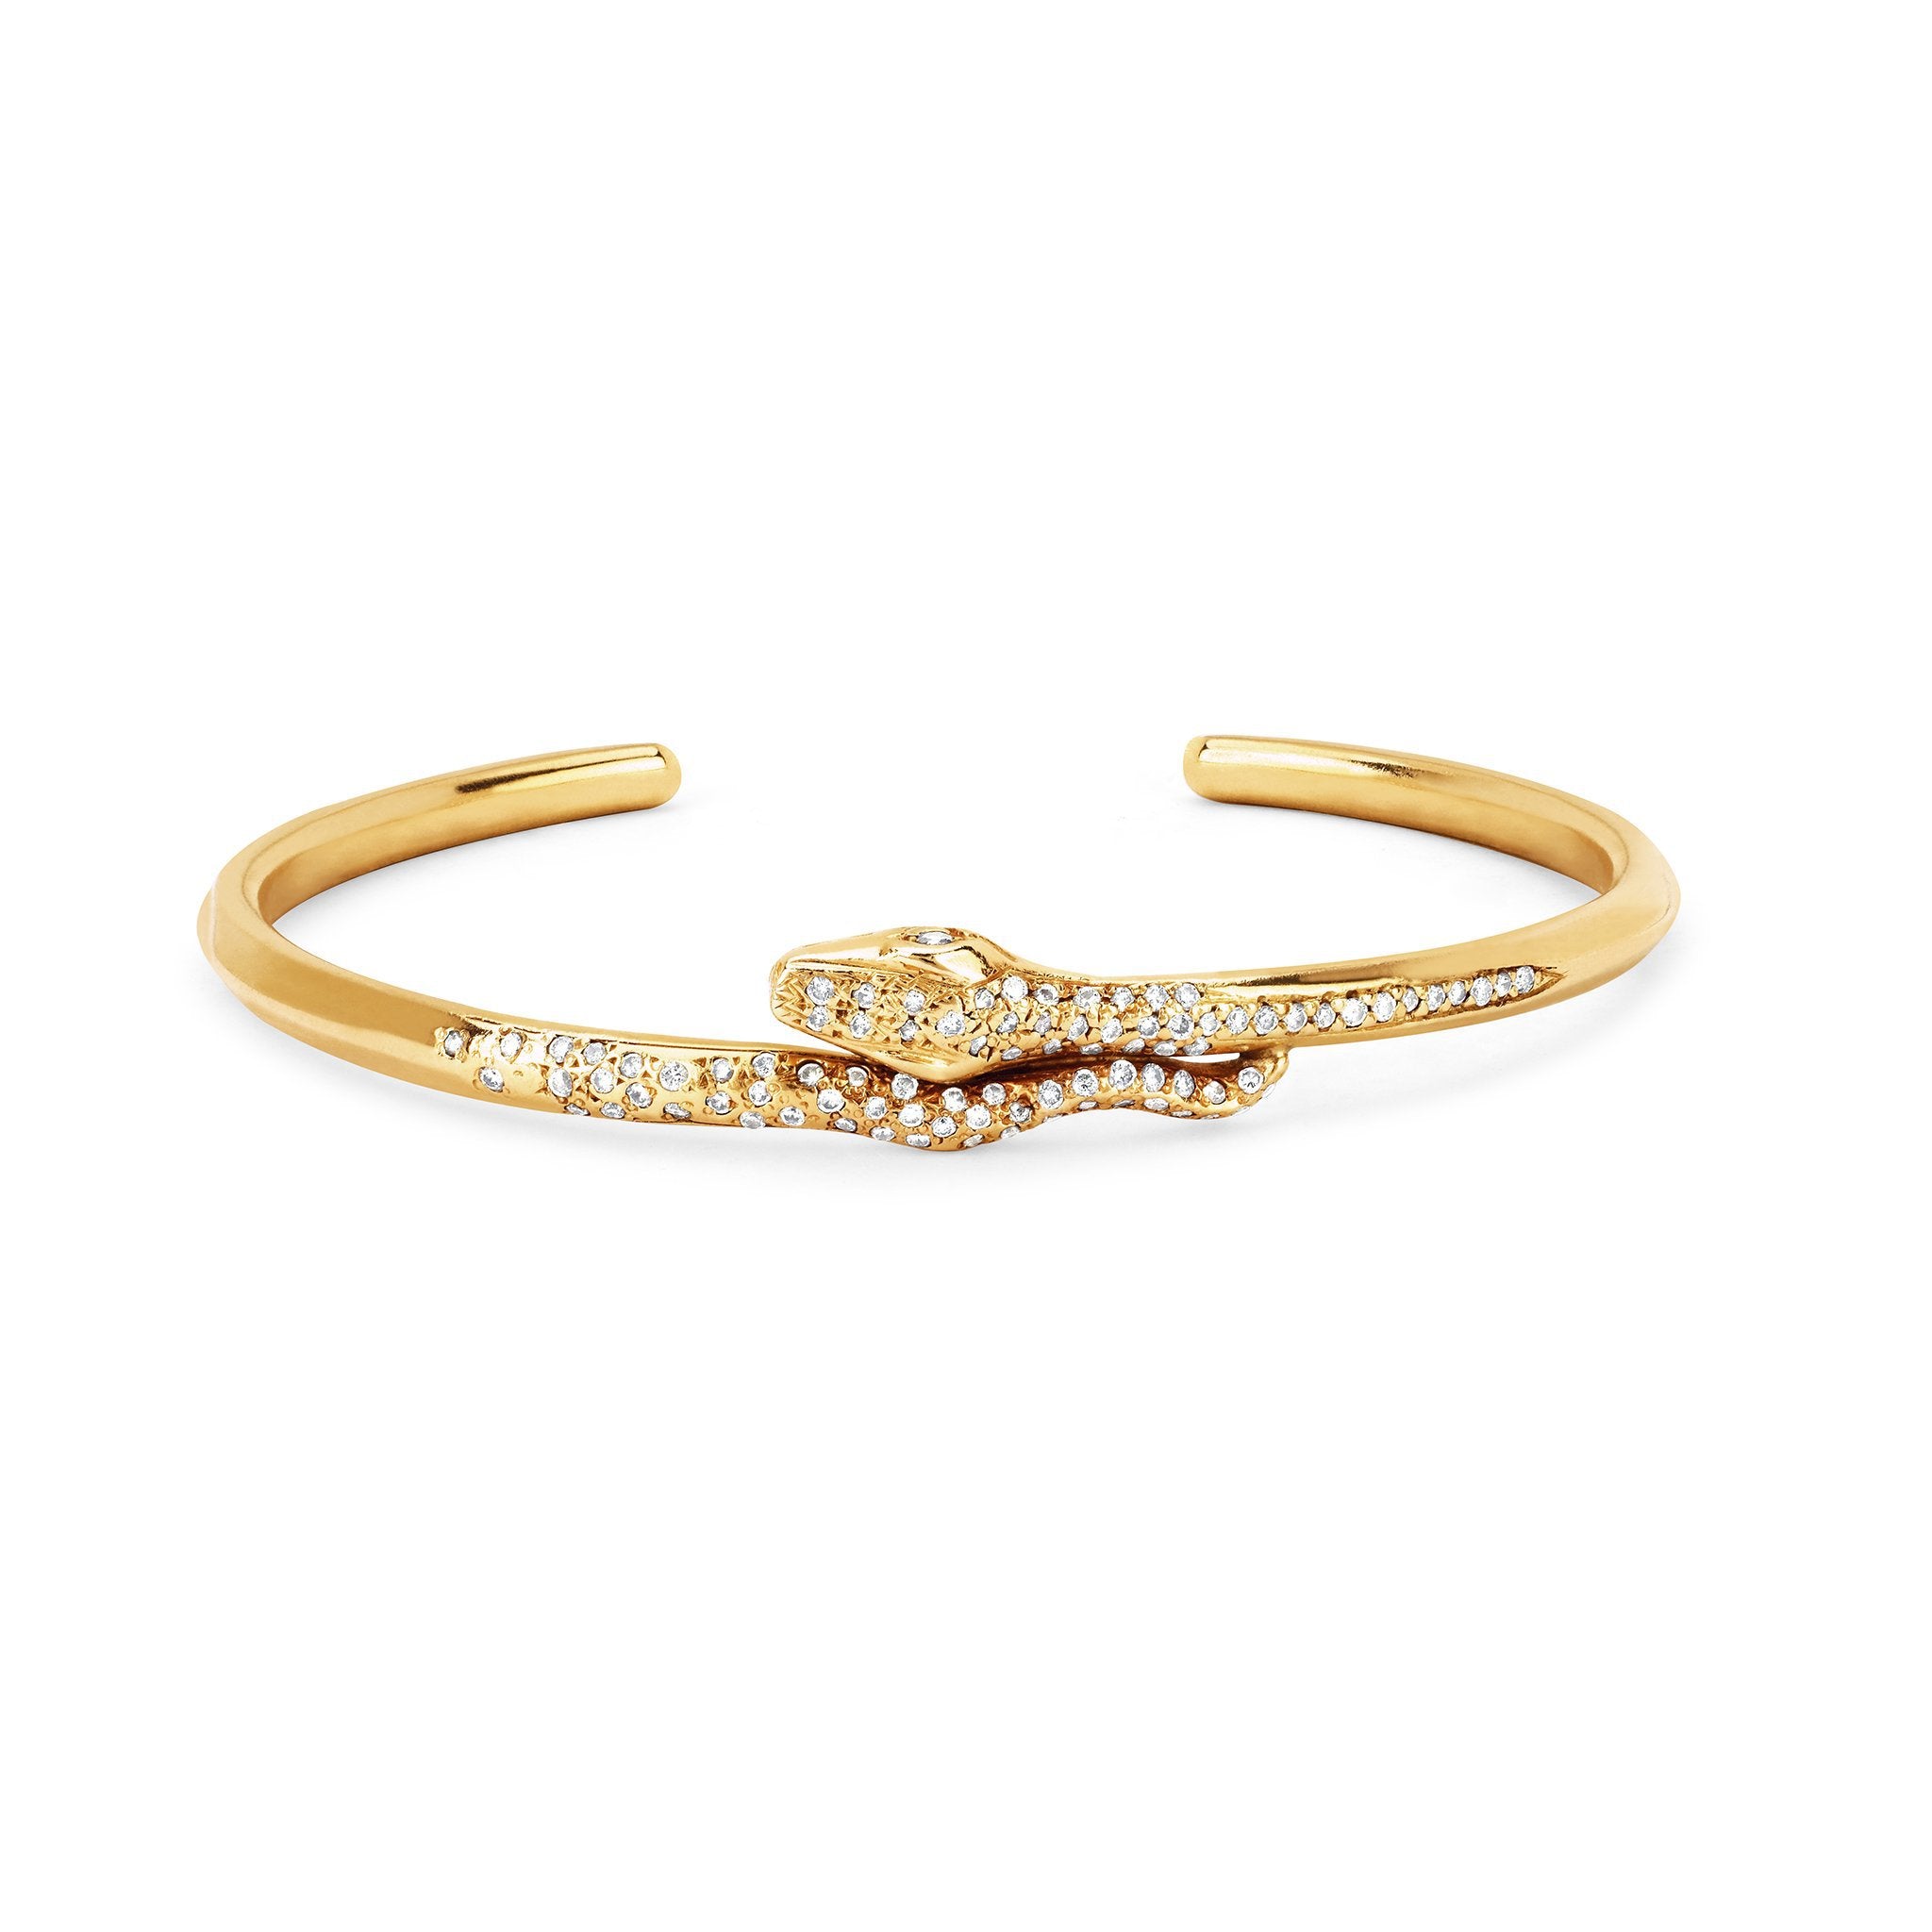 gold silver snake armlet bracelet animal| Alibaba.com